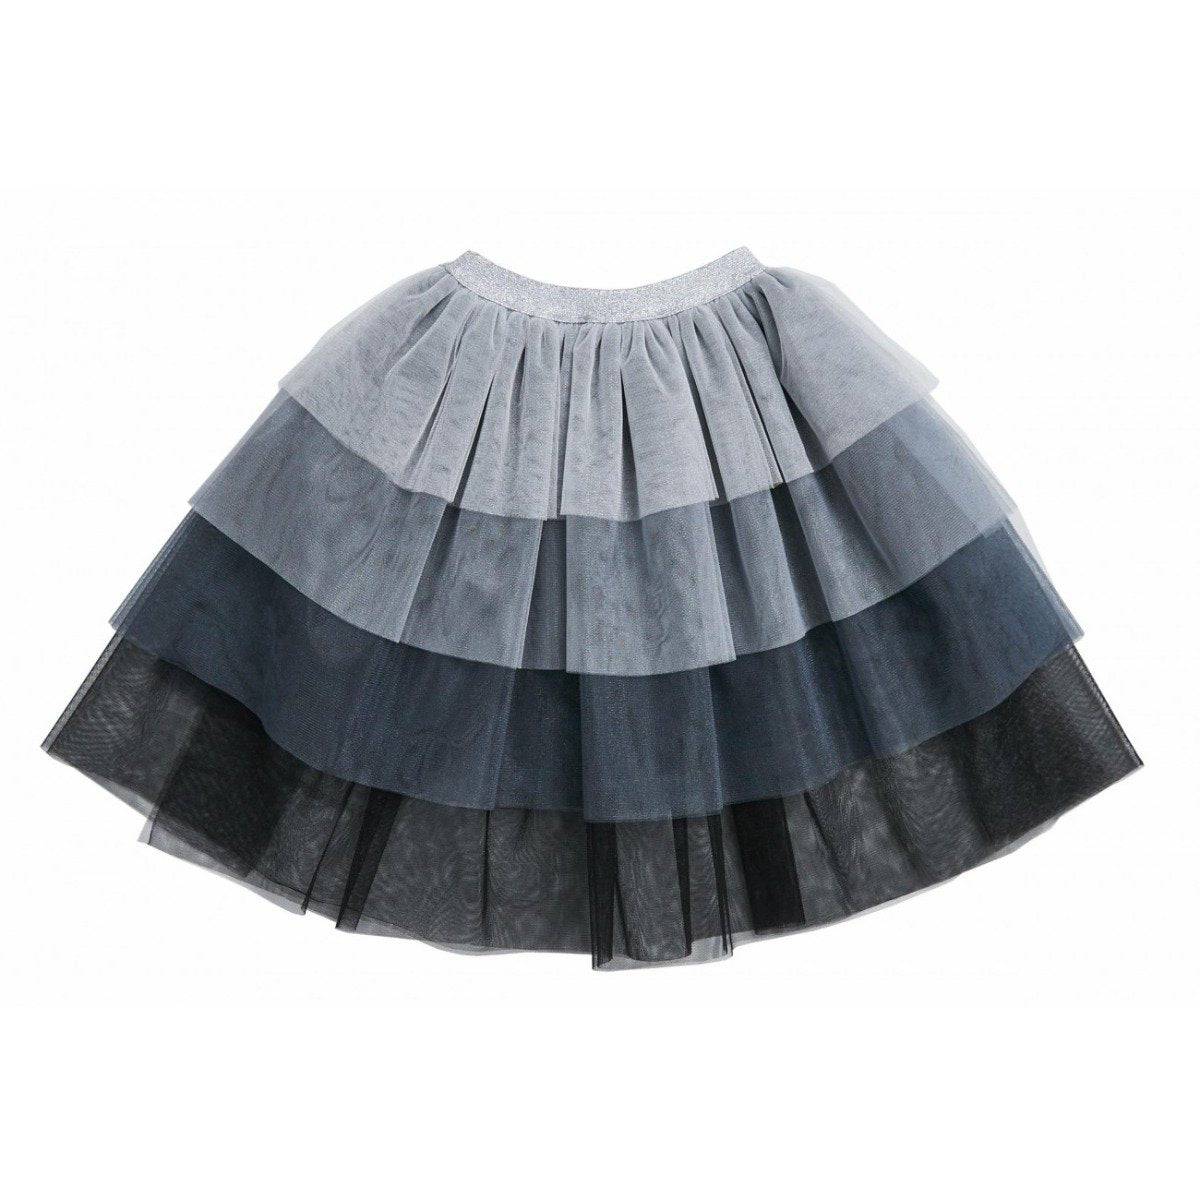 Chloe Layered Tutu Skirt - Twinkle Twinkle Little One